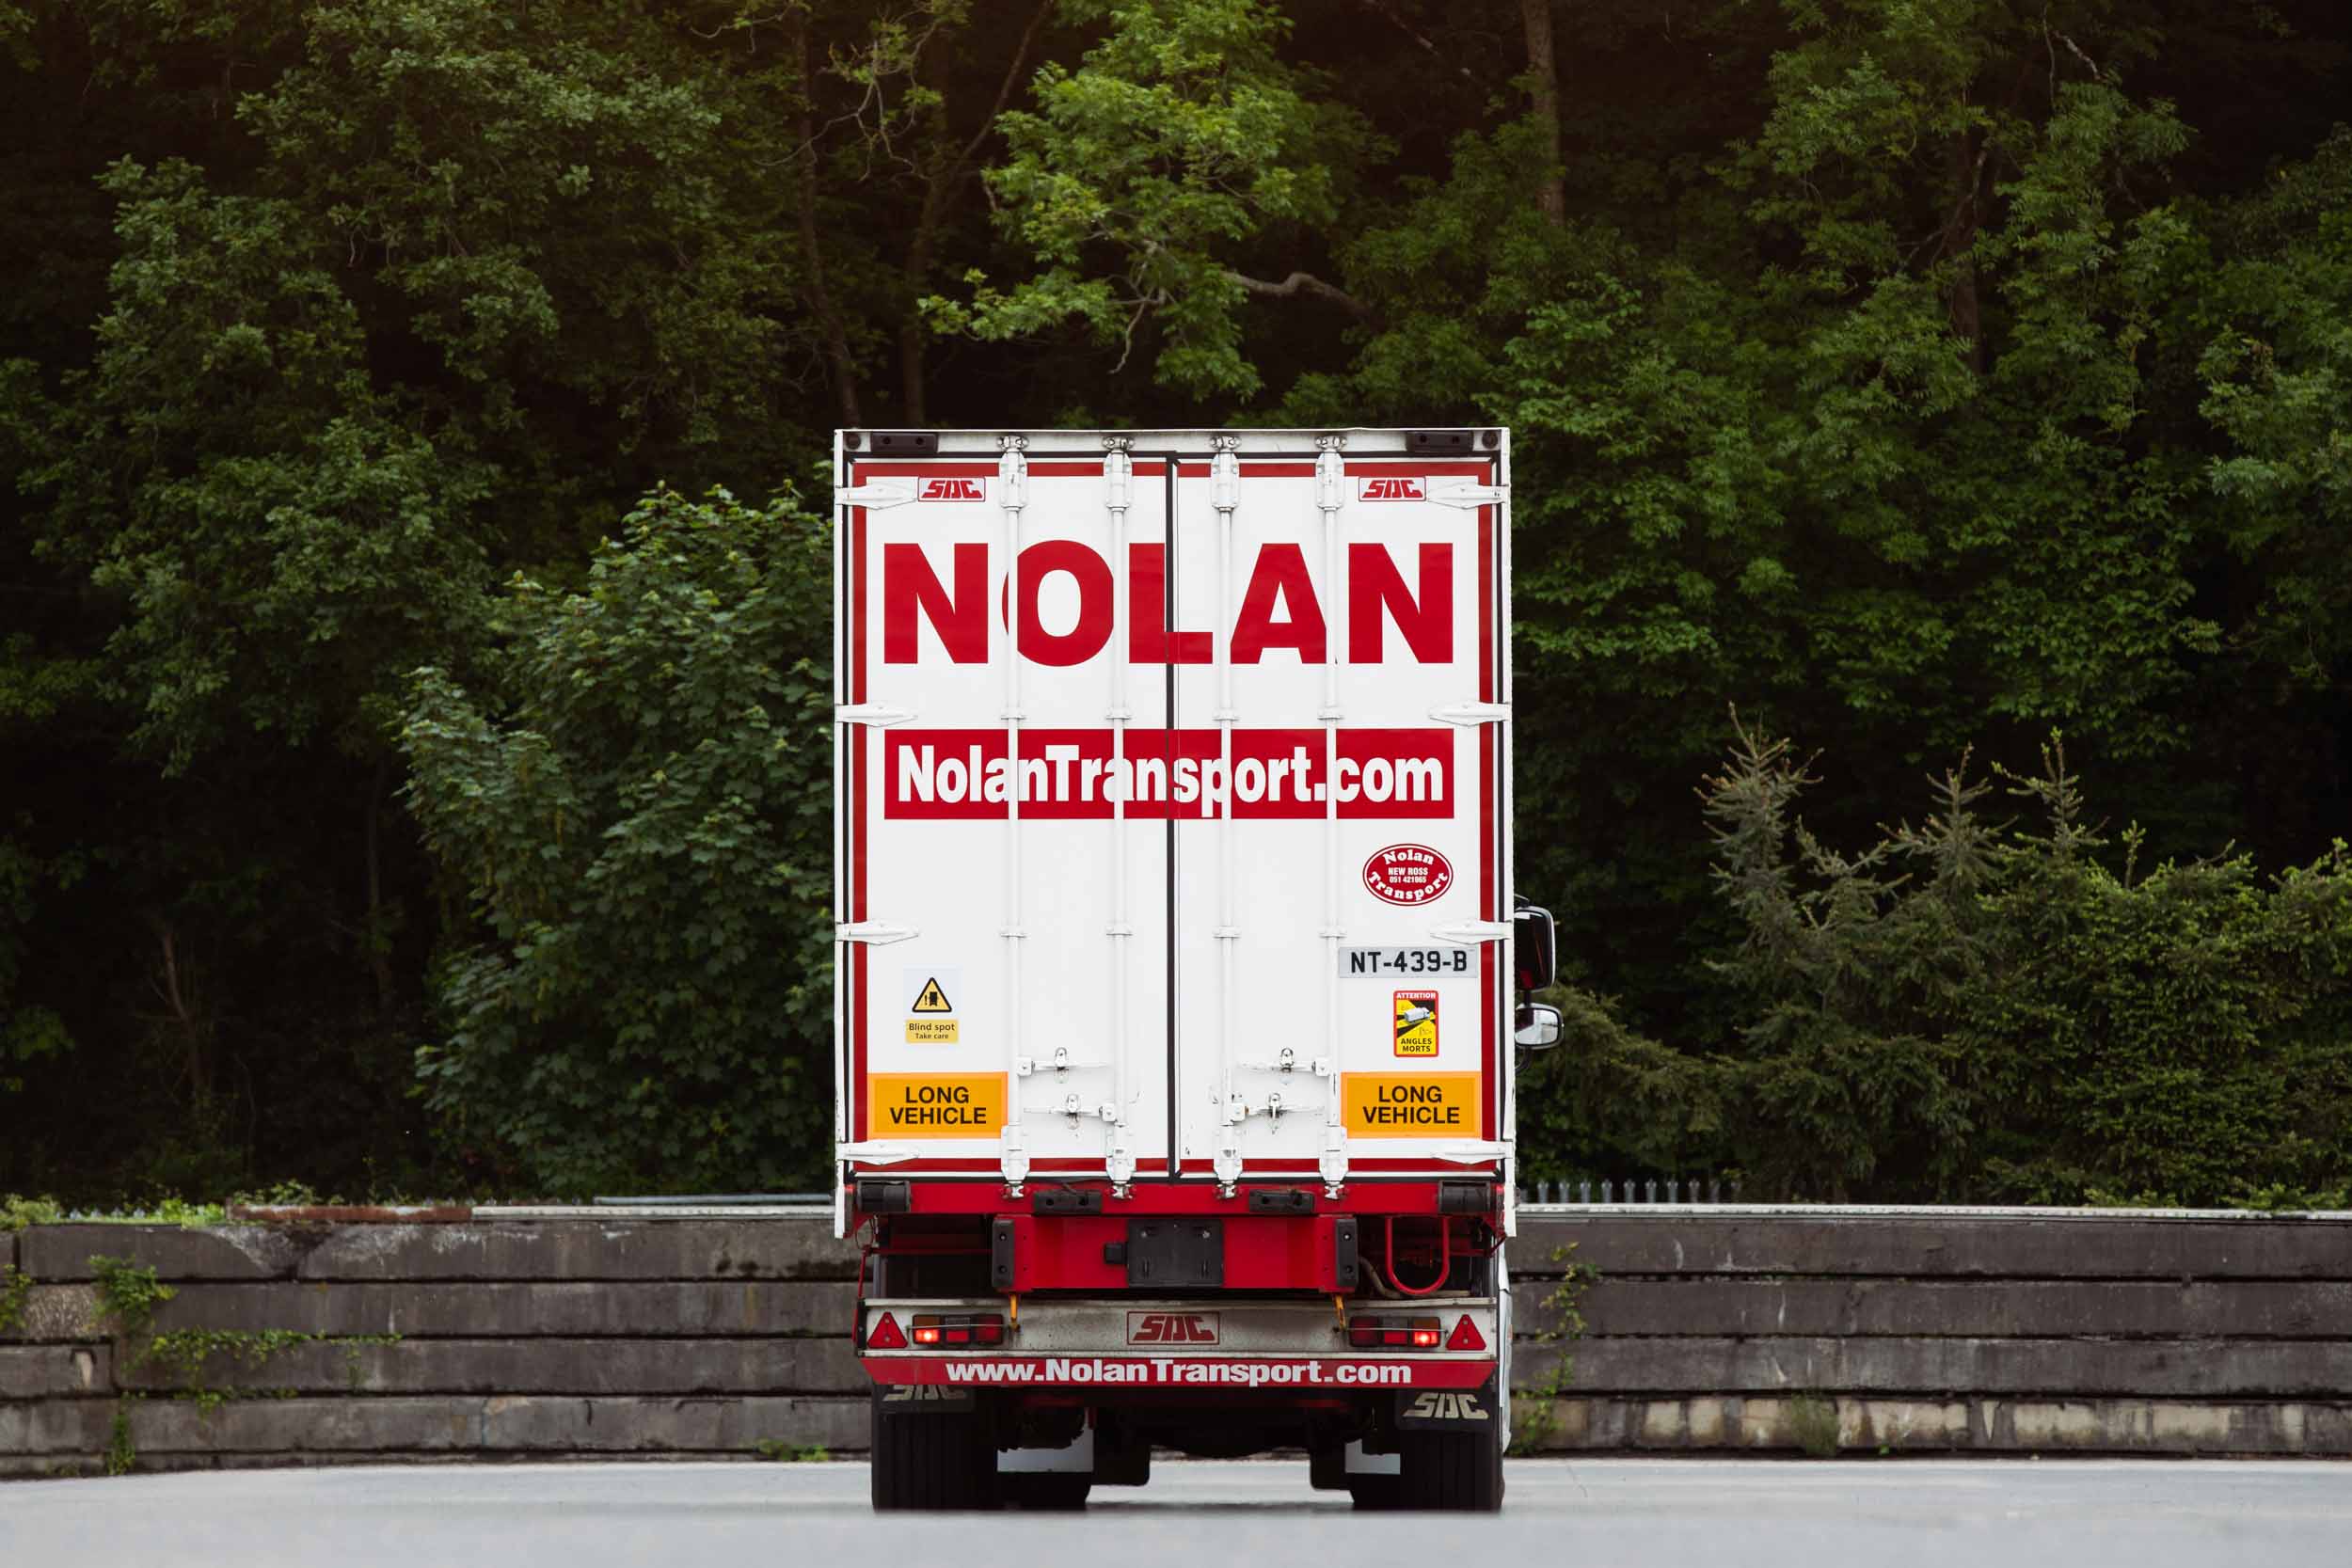 Nolan transport